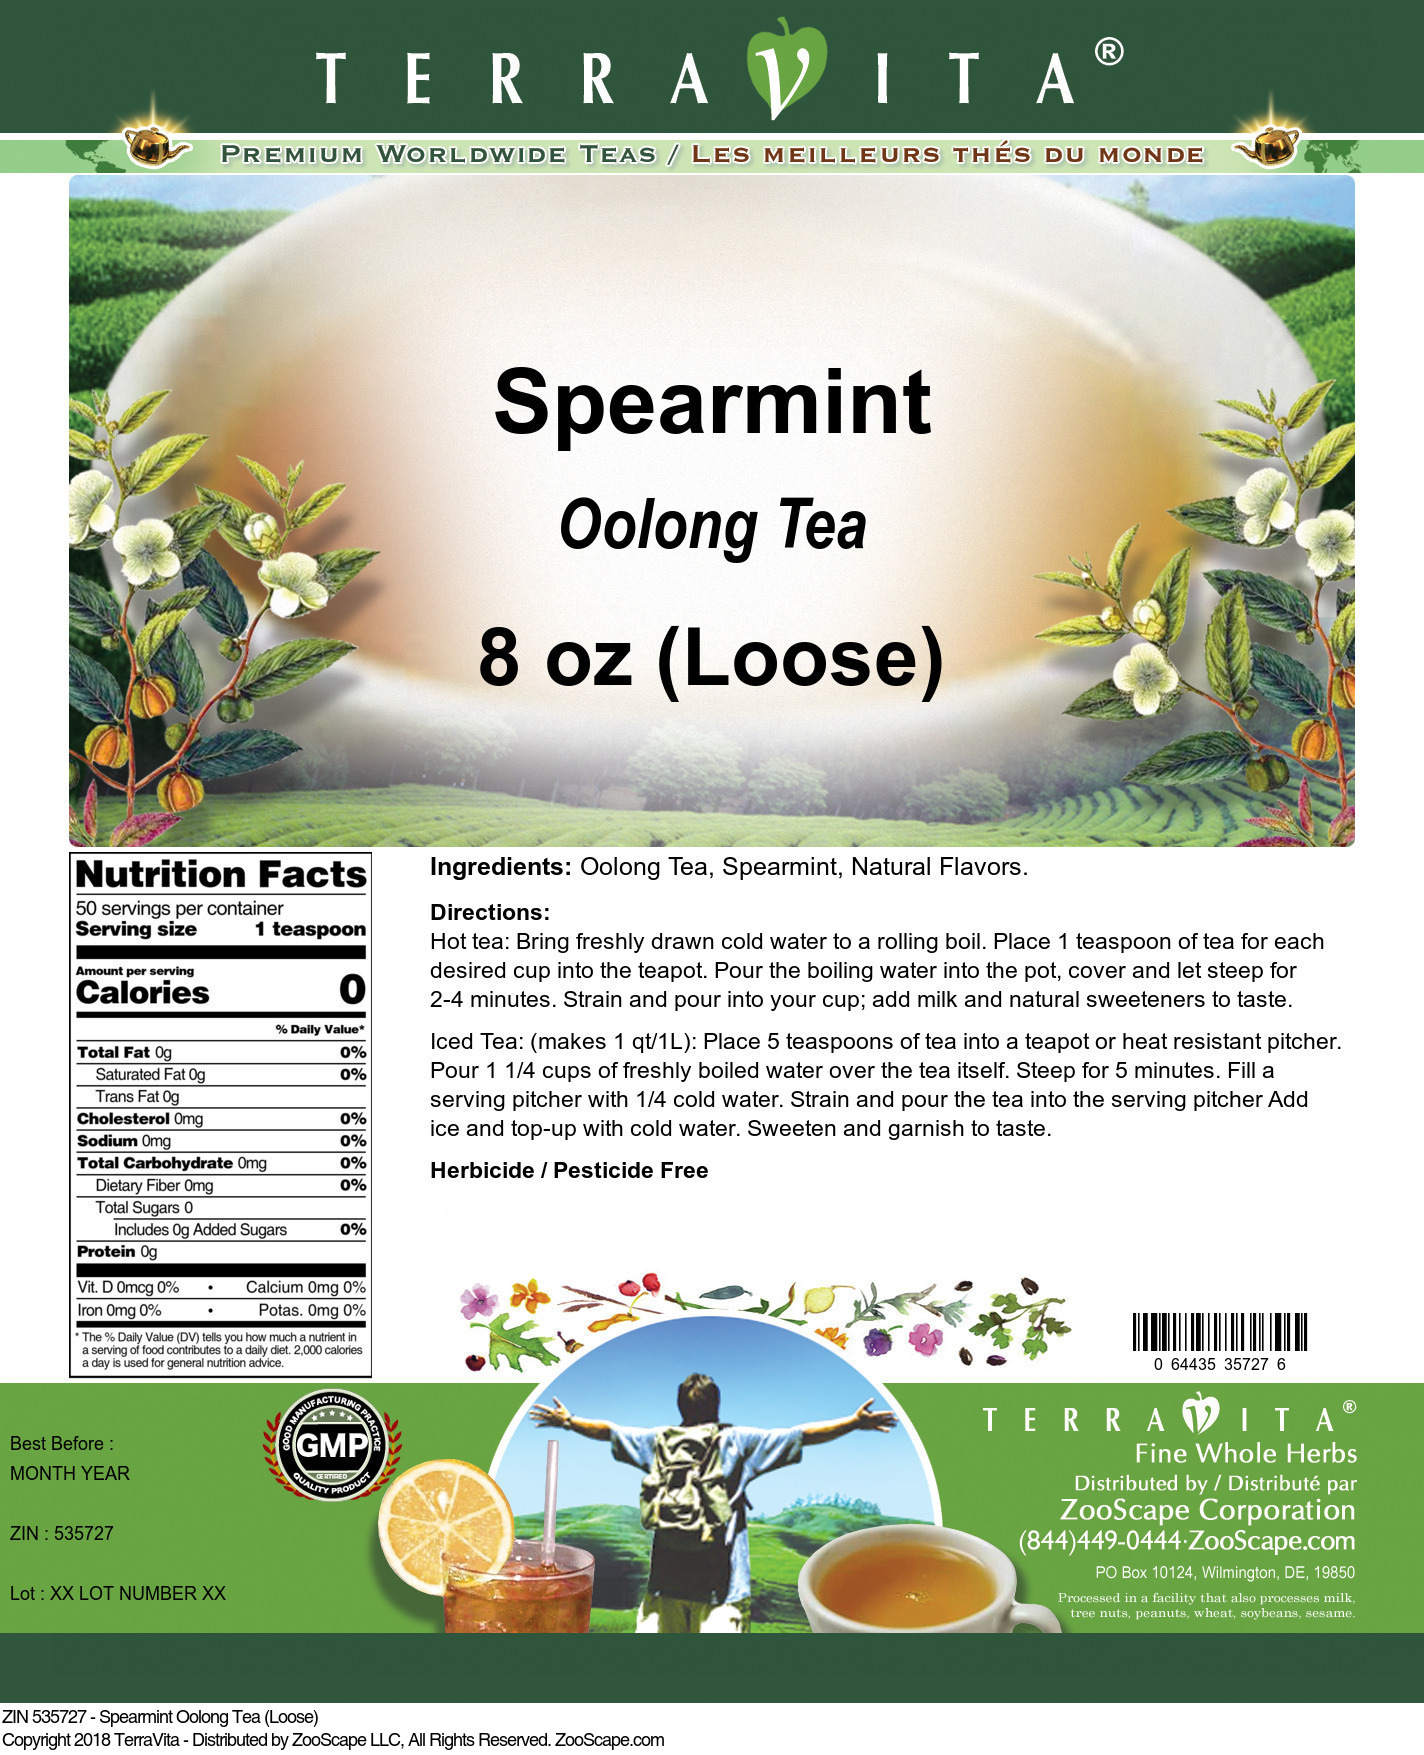 Spearmint Oolong Tea (Loose) - Label